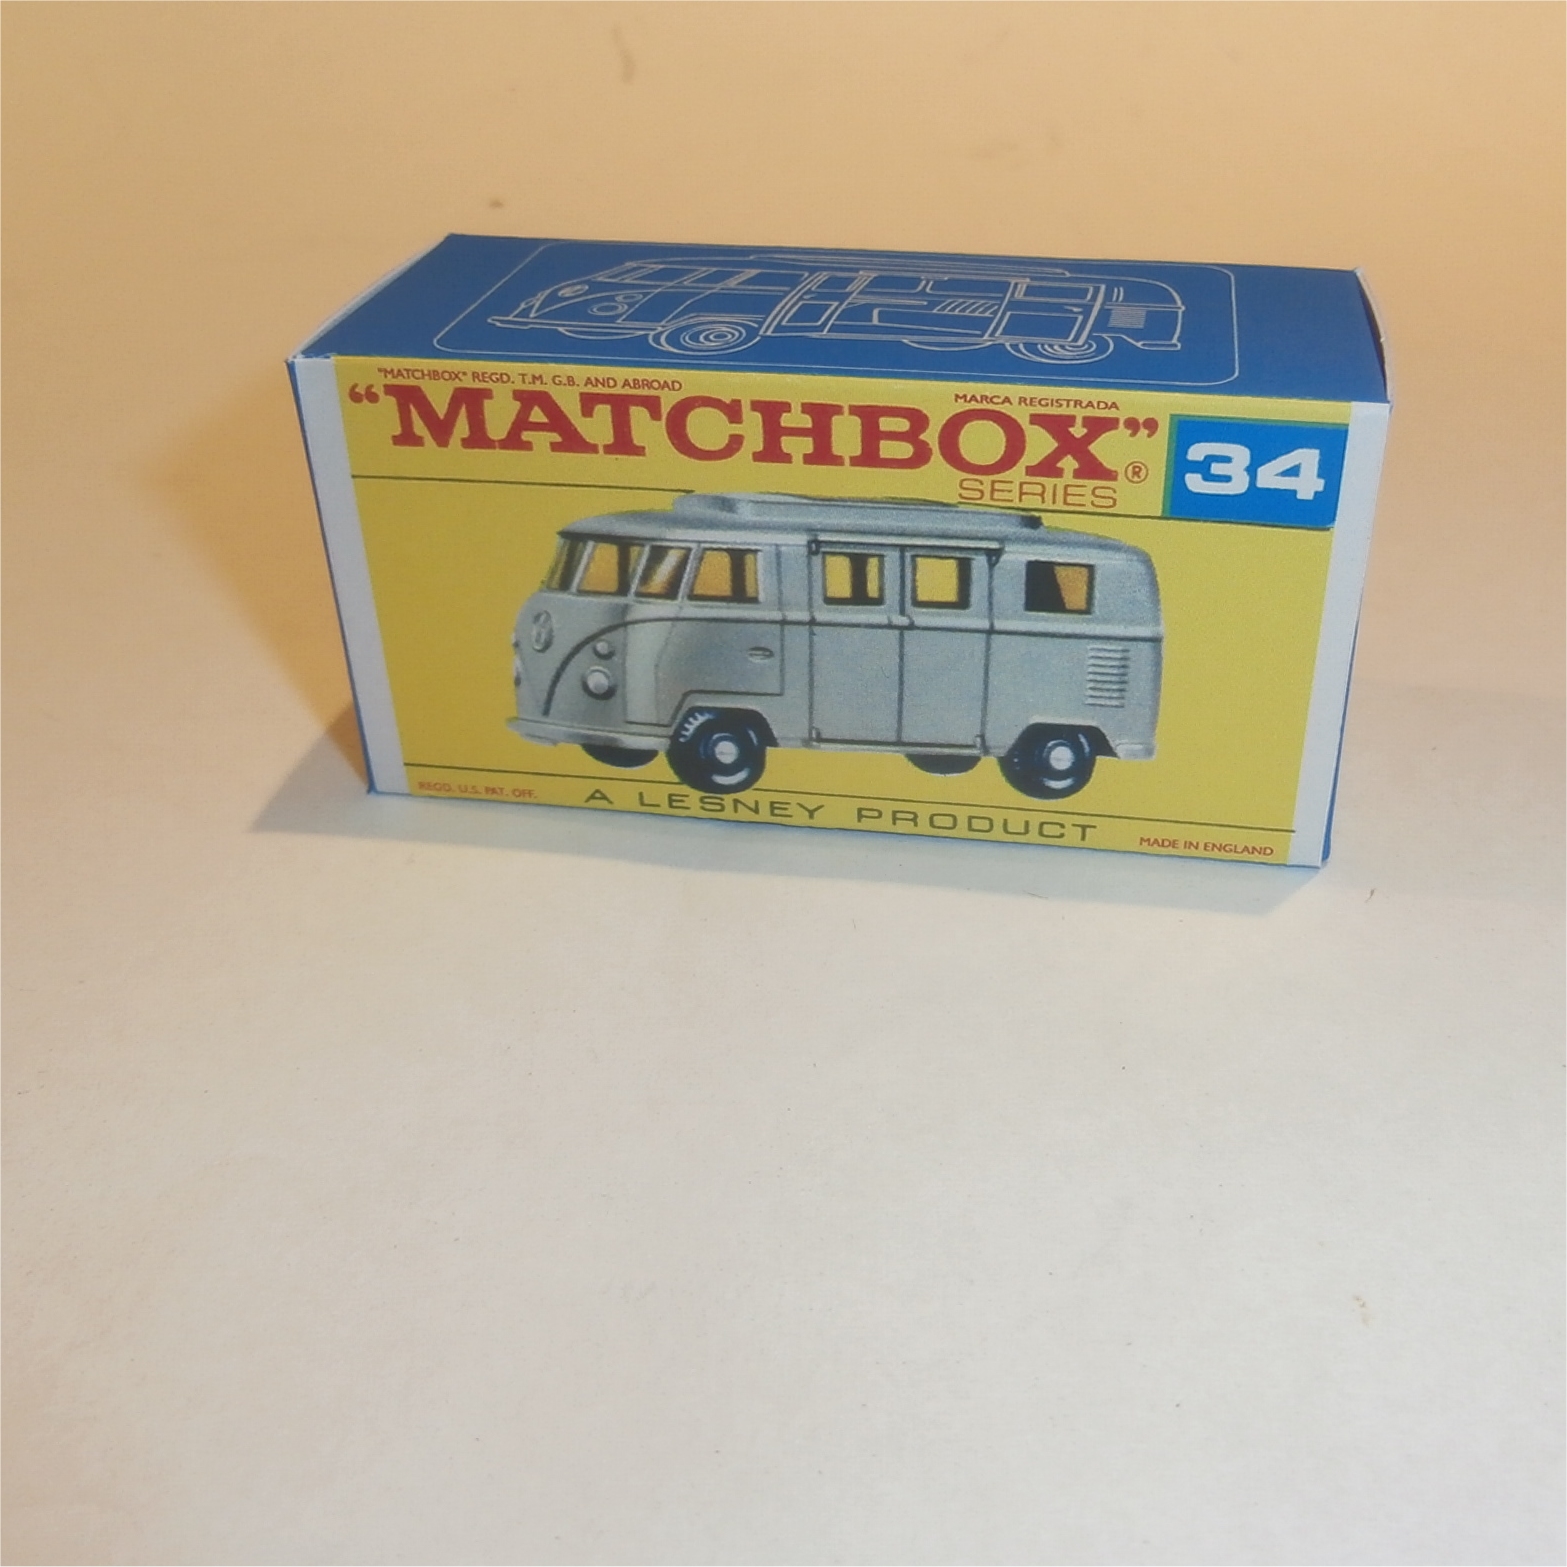 Matchbox Lesney 25 b Volkswagen VW 1200 Sedan empty Repro C style Box